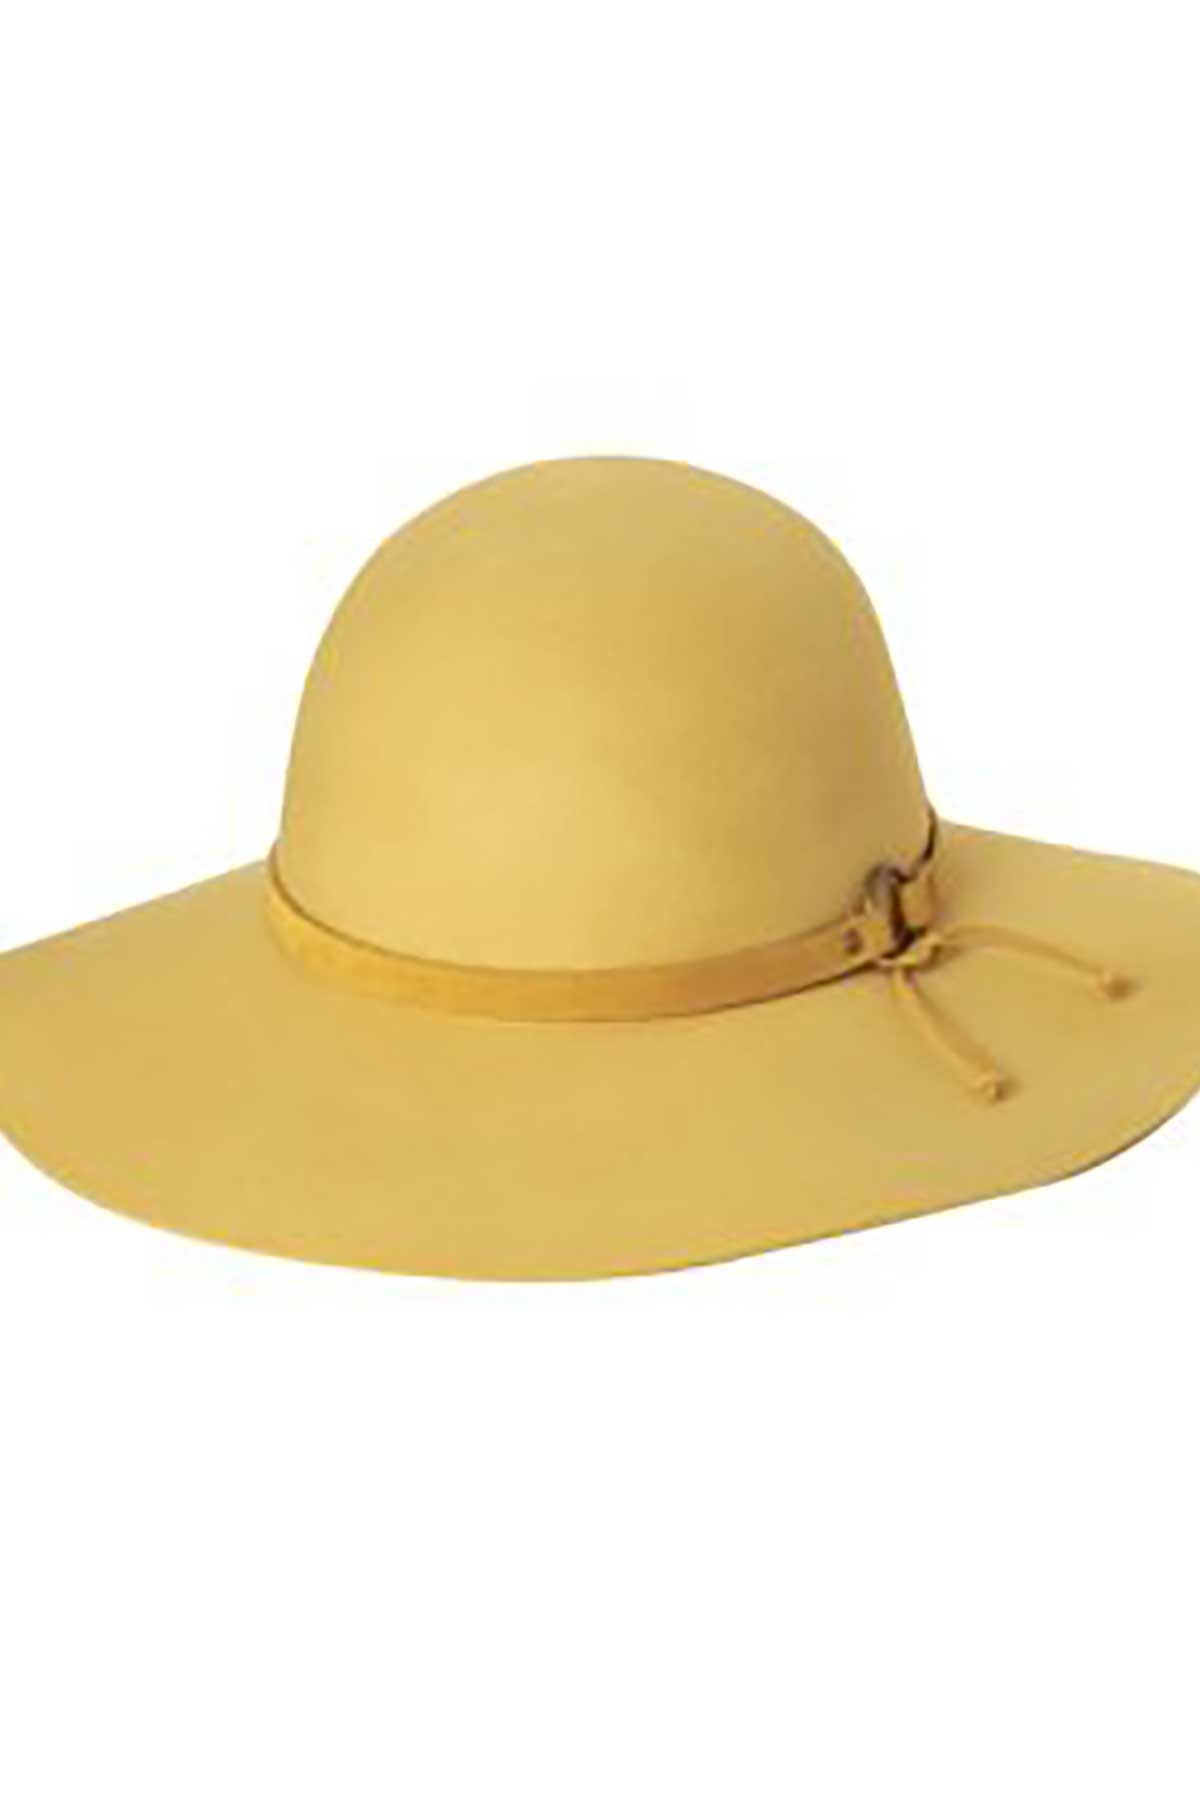 Kooringal Wide brim - Forever after hat in Mustard